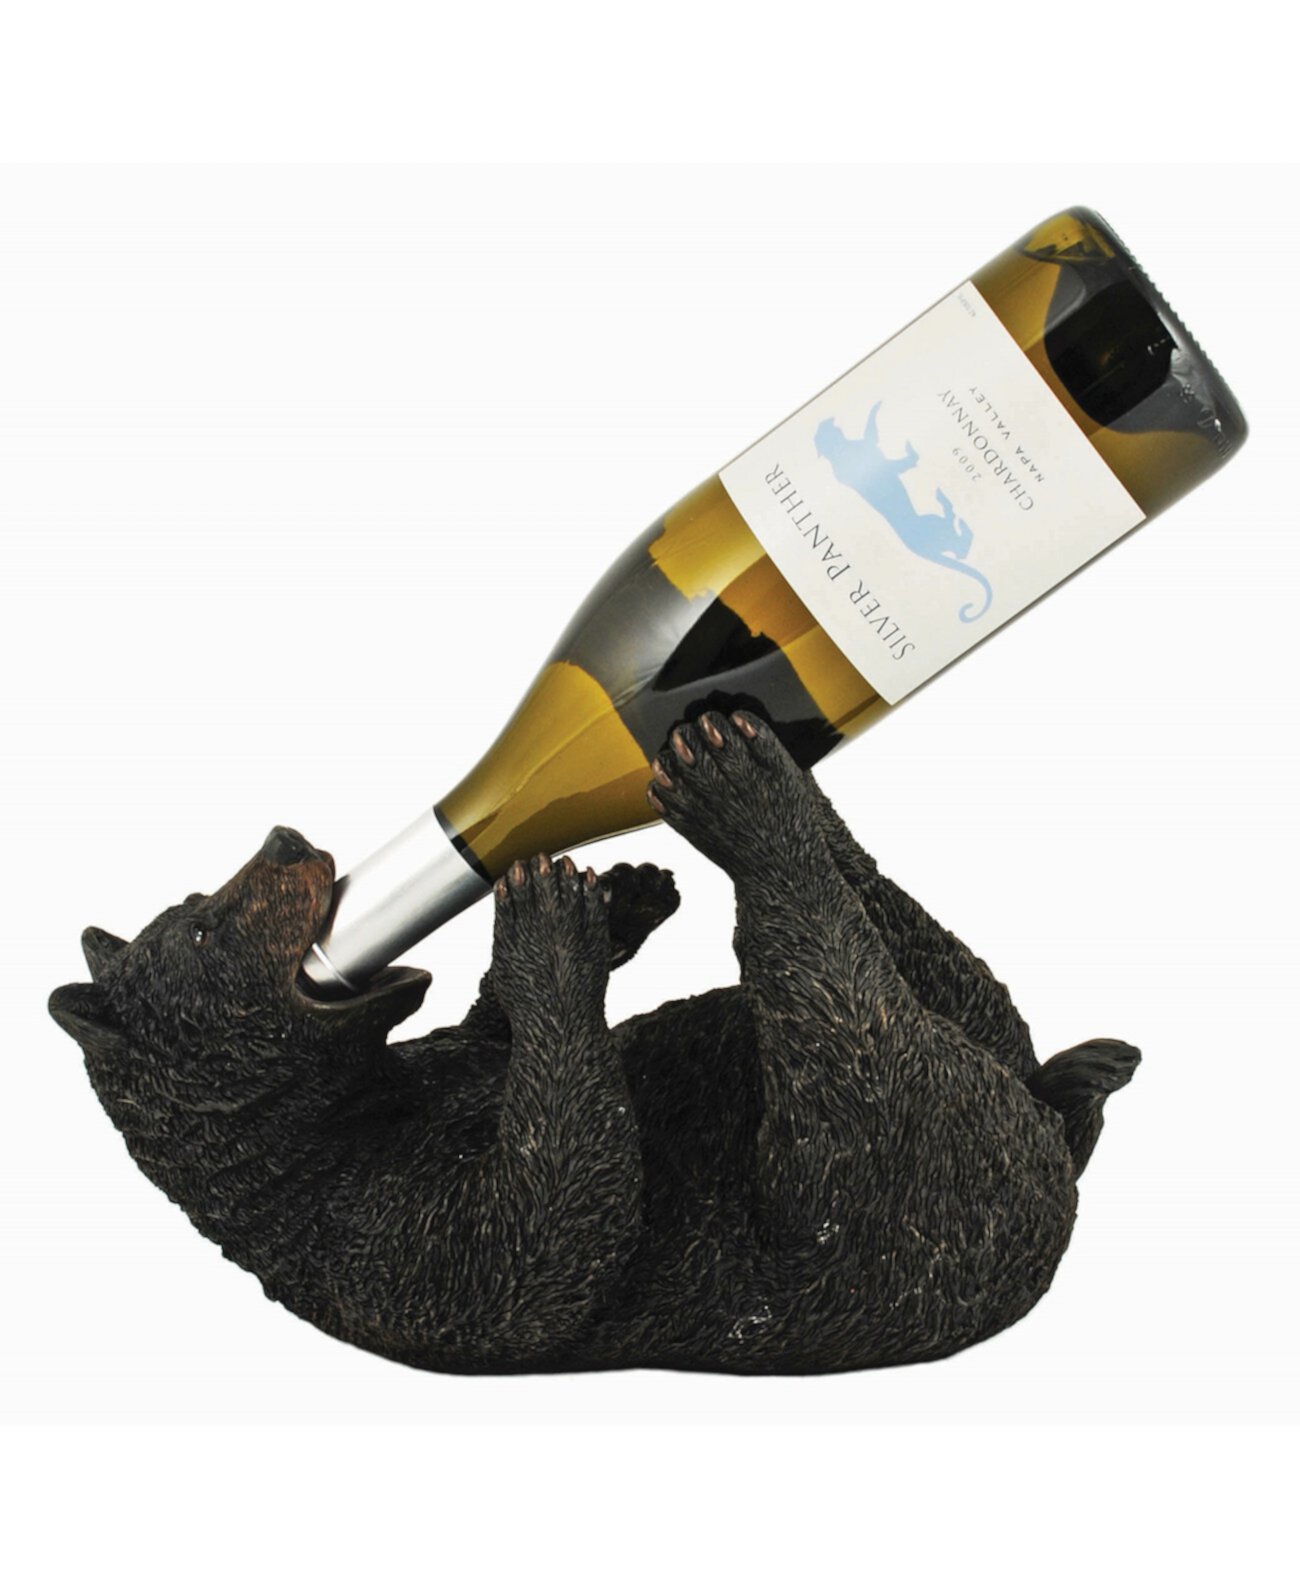 Вино лось. Подставка для вина медведь. Держатель для бутылок вина медведь. Держатель для вина медведь. Держатель для бутылки медведь.